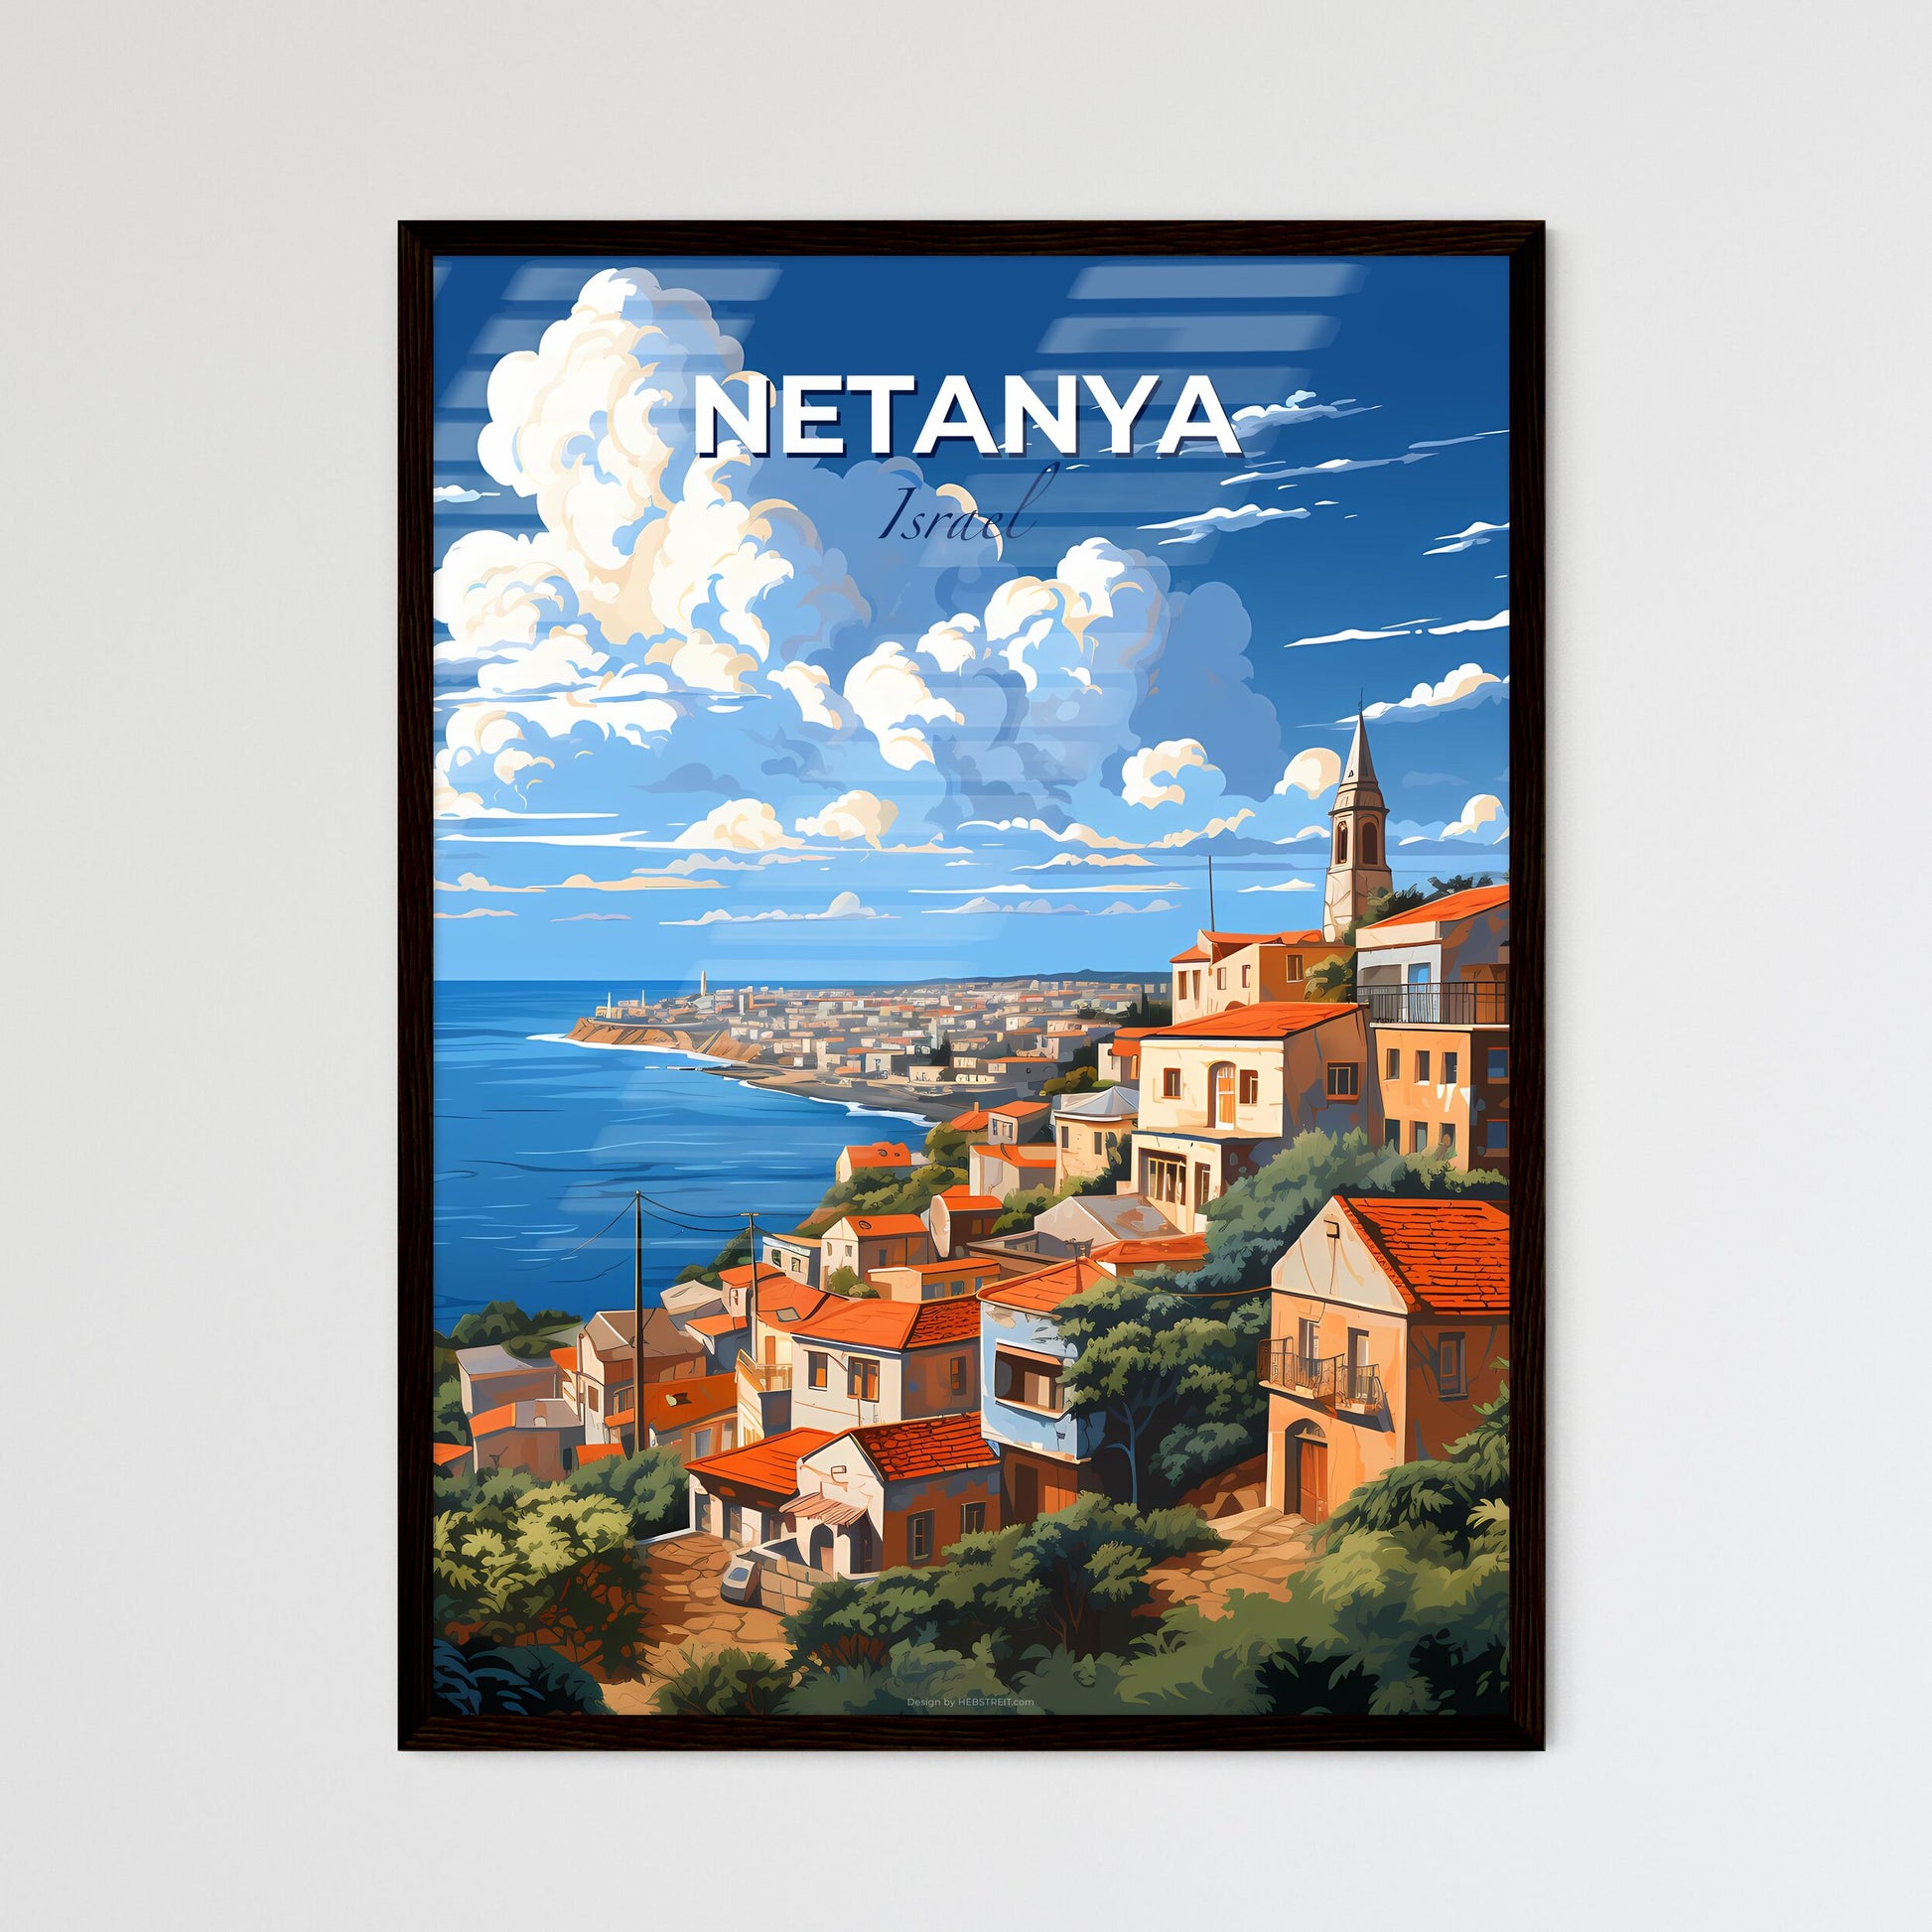 Vibrant Painting Captures Netanya's Hilltop Skyline by the Mediterranean Sea Default Title